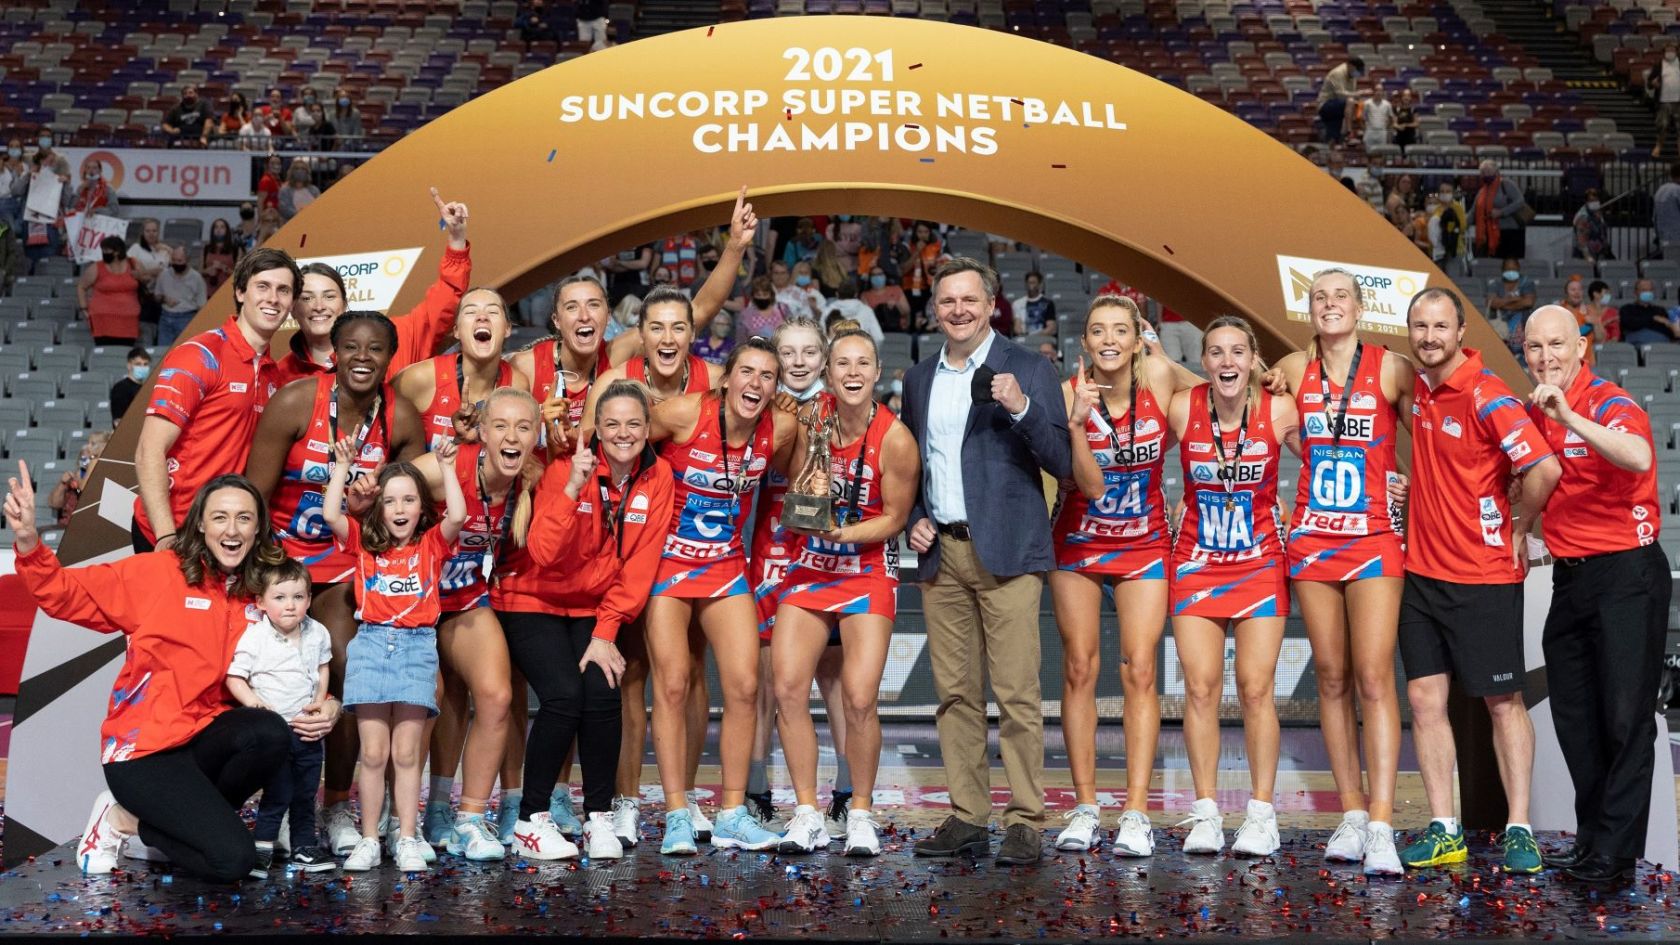 Suncorp renews commitment to women's sport 